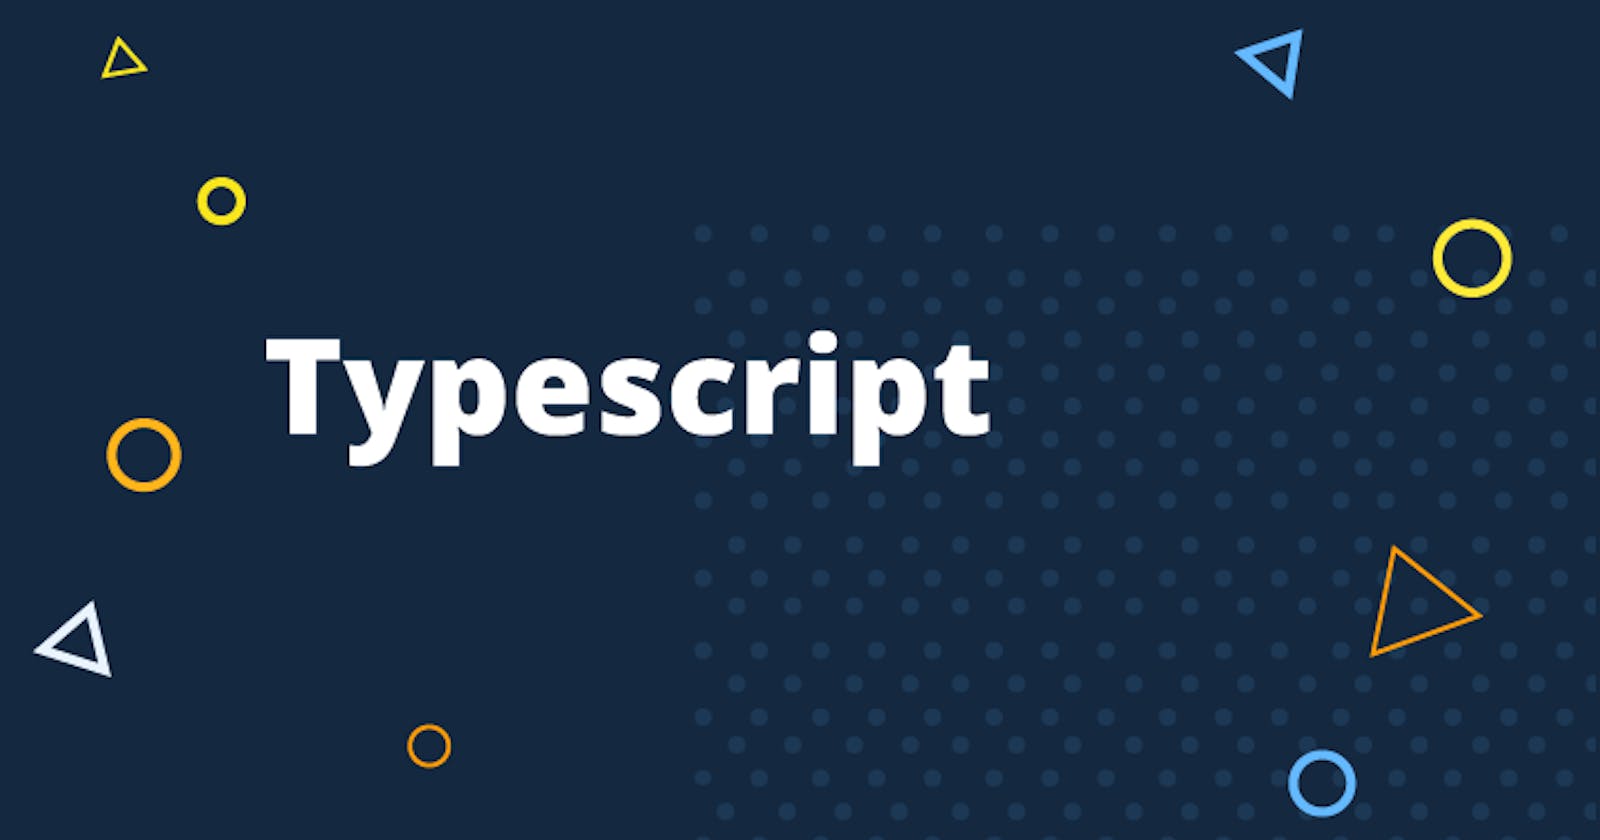 Few Tips to prevent runtime errors in Typescript